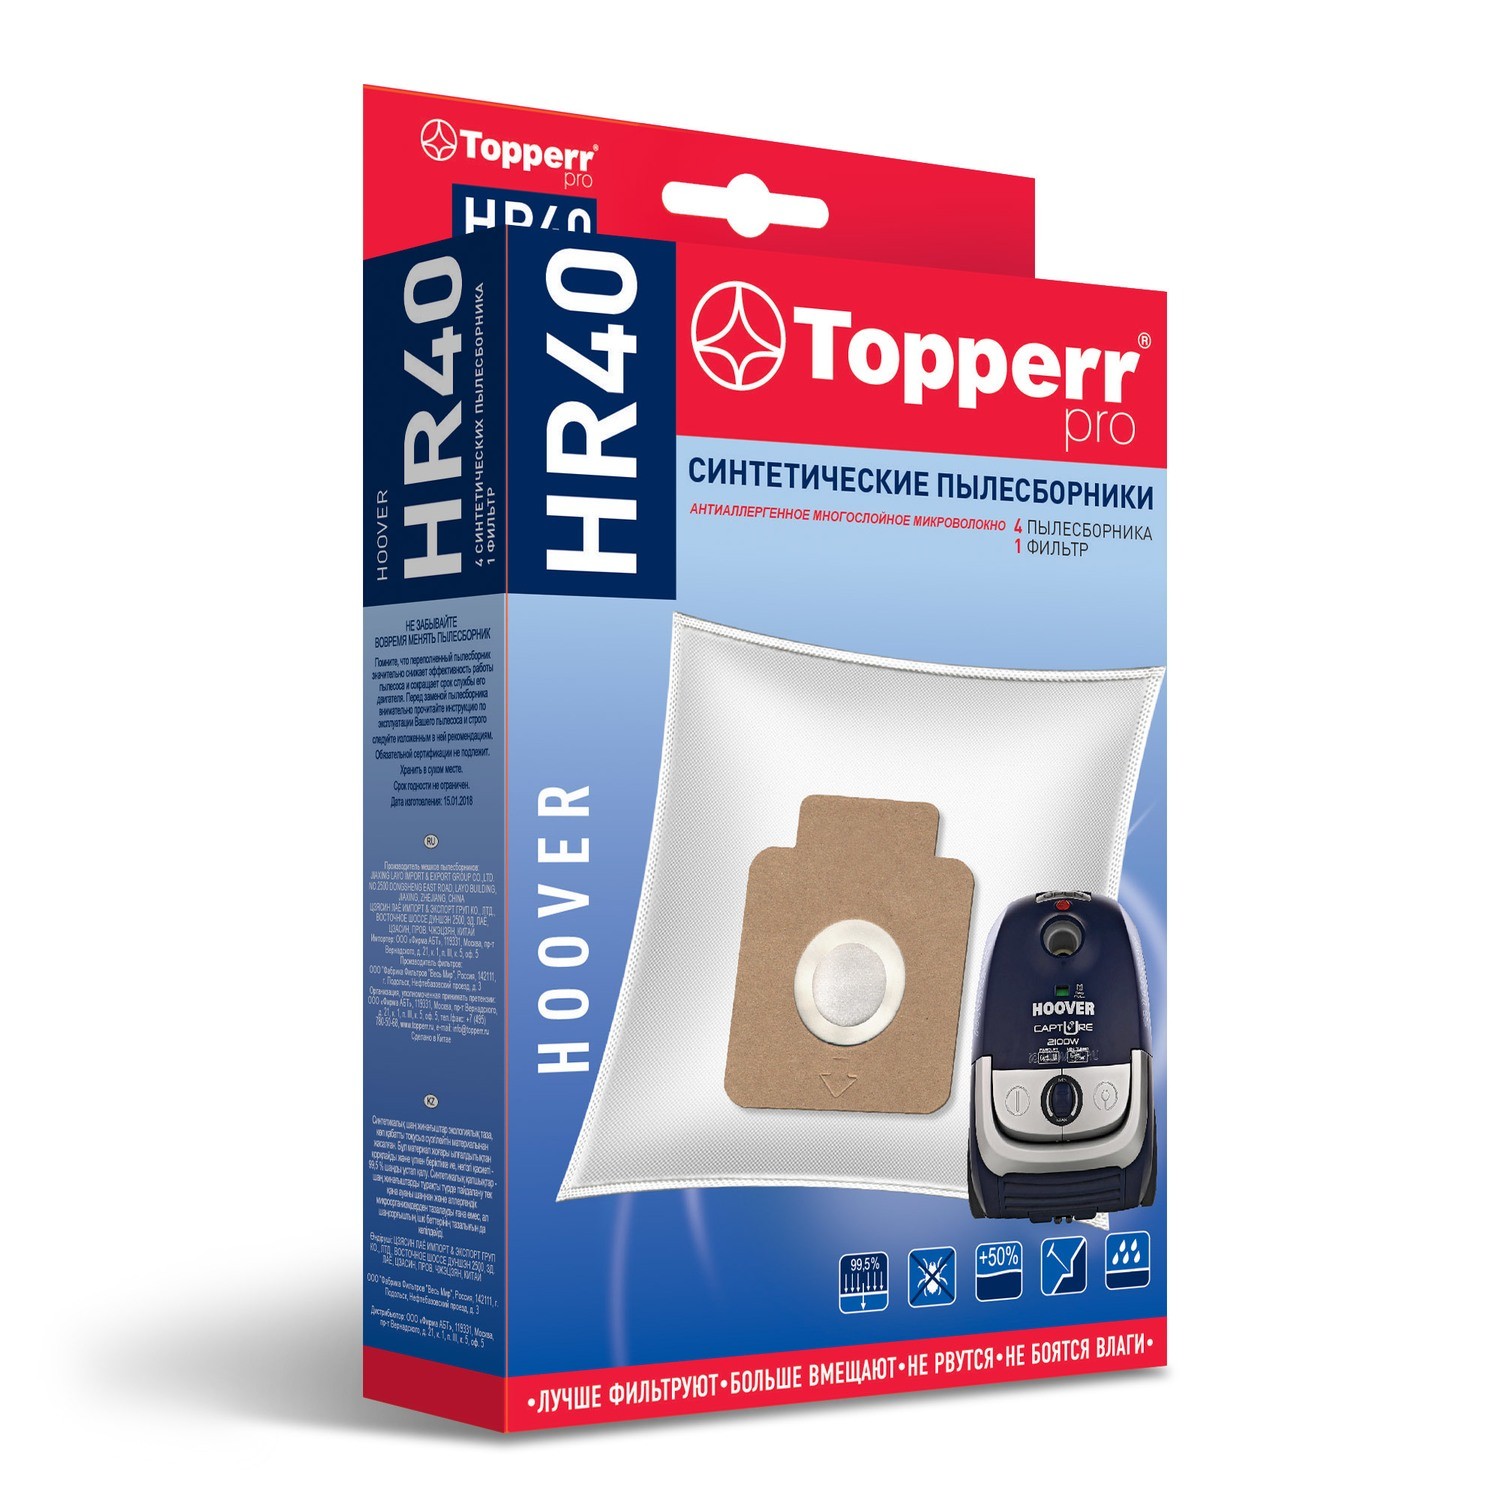 Пылесборник Topperr HR 40 пылесборники topperr ph 3 бумажные 4пылесбор 1фильт